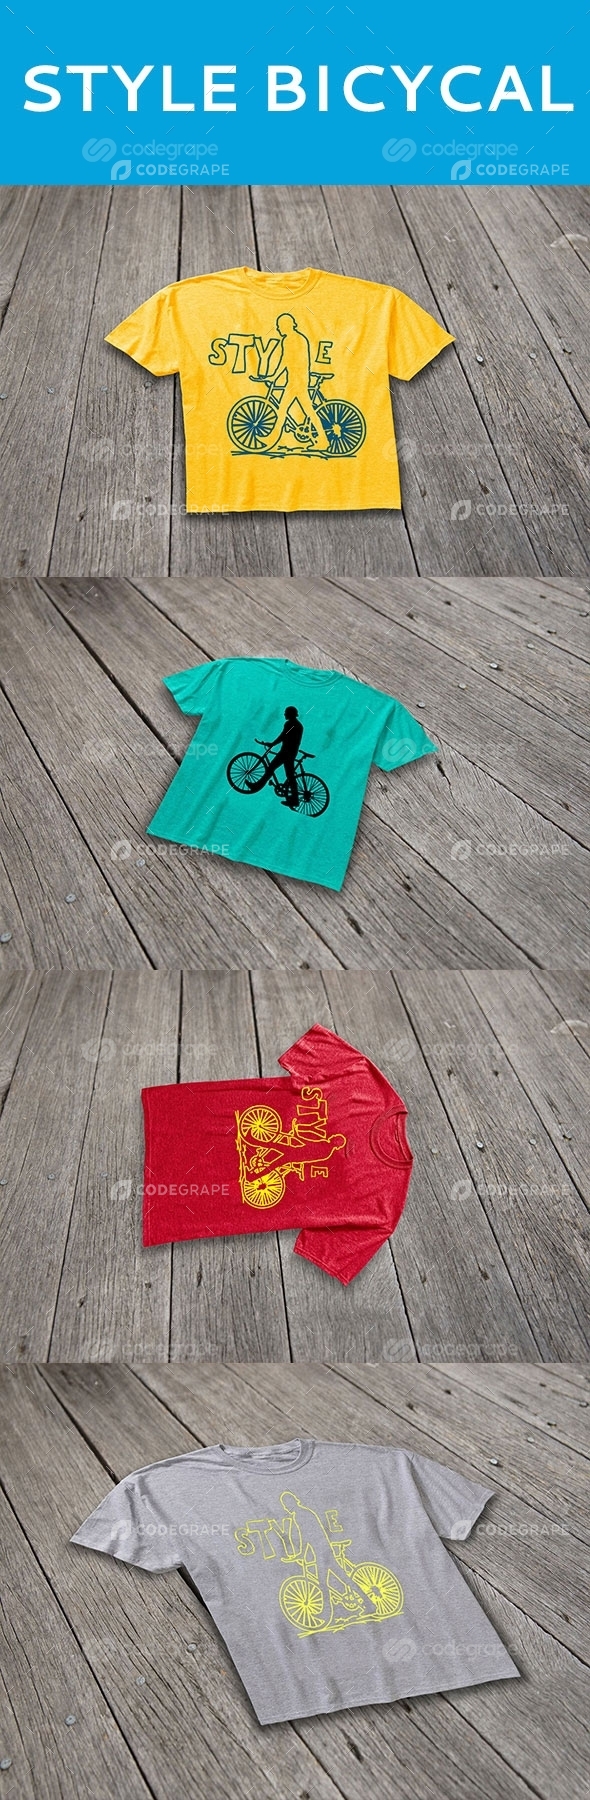 Bicycle T-Shirt Design